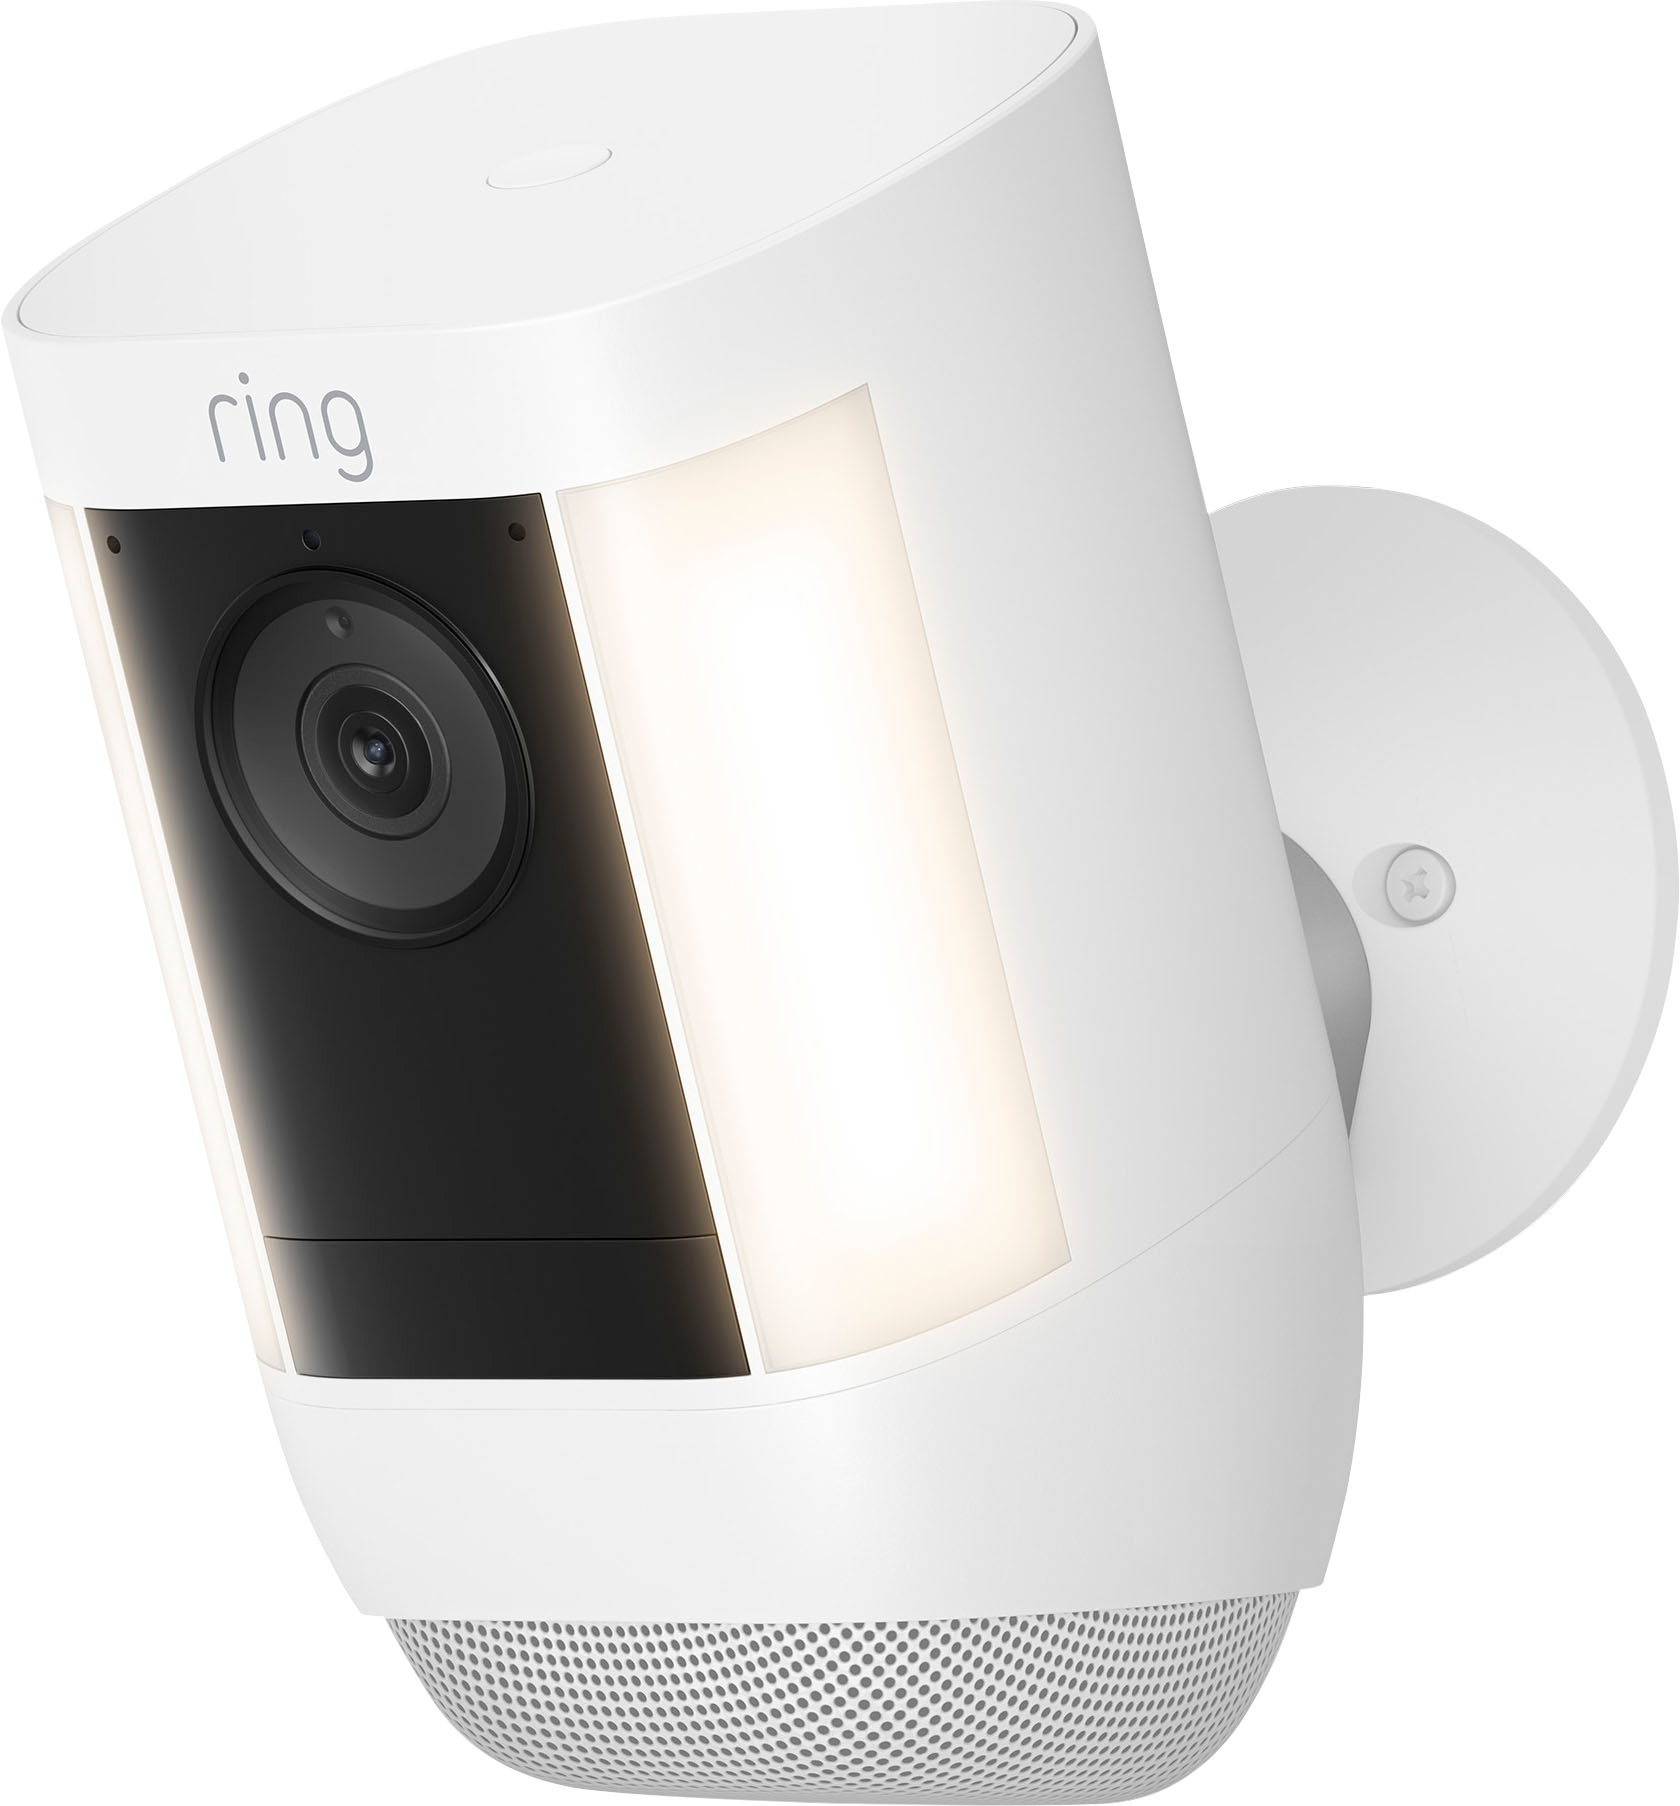 Ring Spotlight Cam Pro review